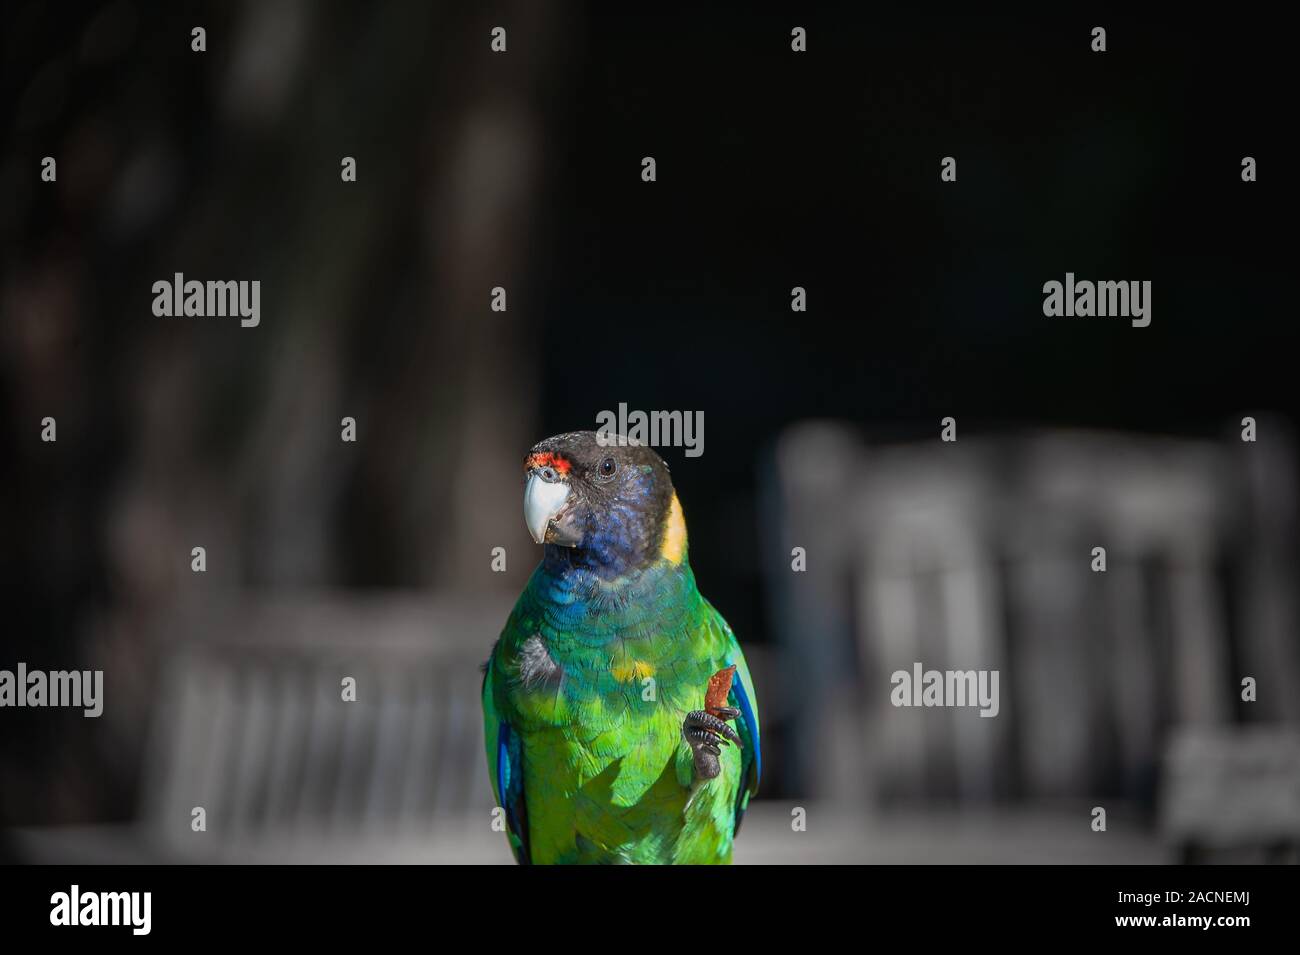 Australian Ringneck Parrot (Barnardius zonarius) against a dark background Stock Photo